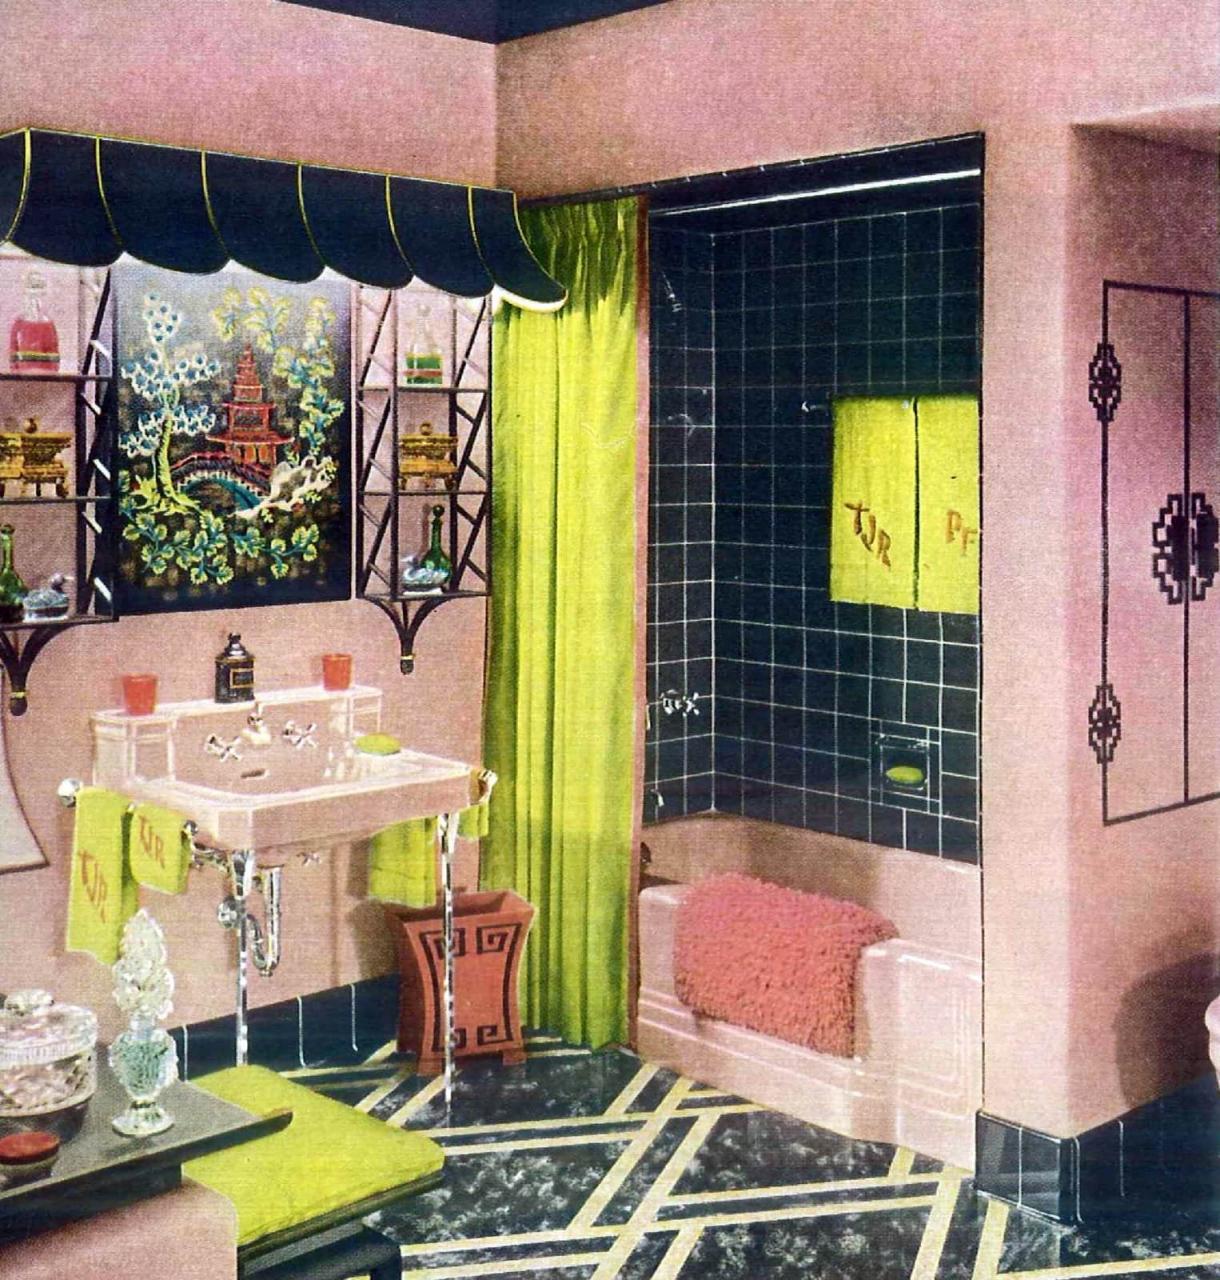 28 vintage pink bathrooms See some wild bubblegumera midcentury home